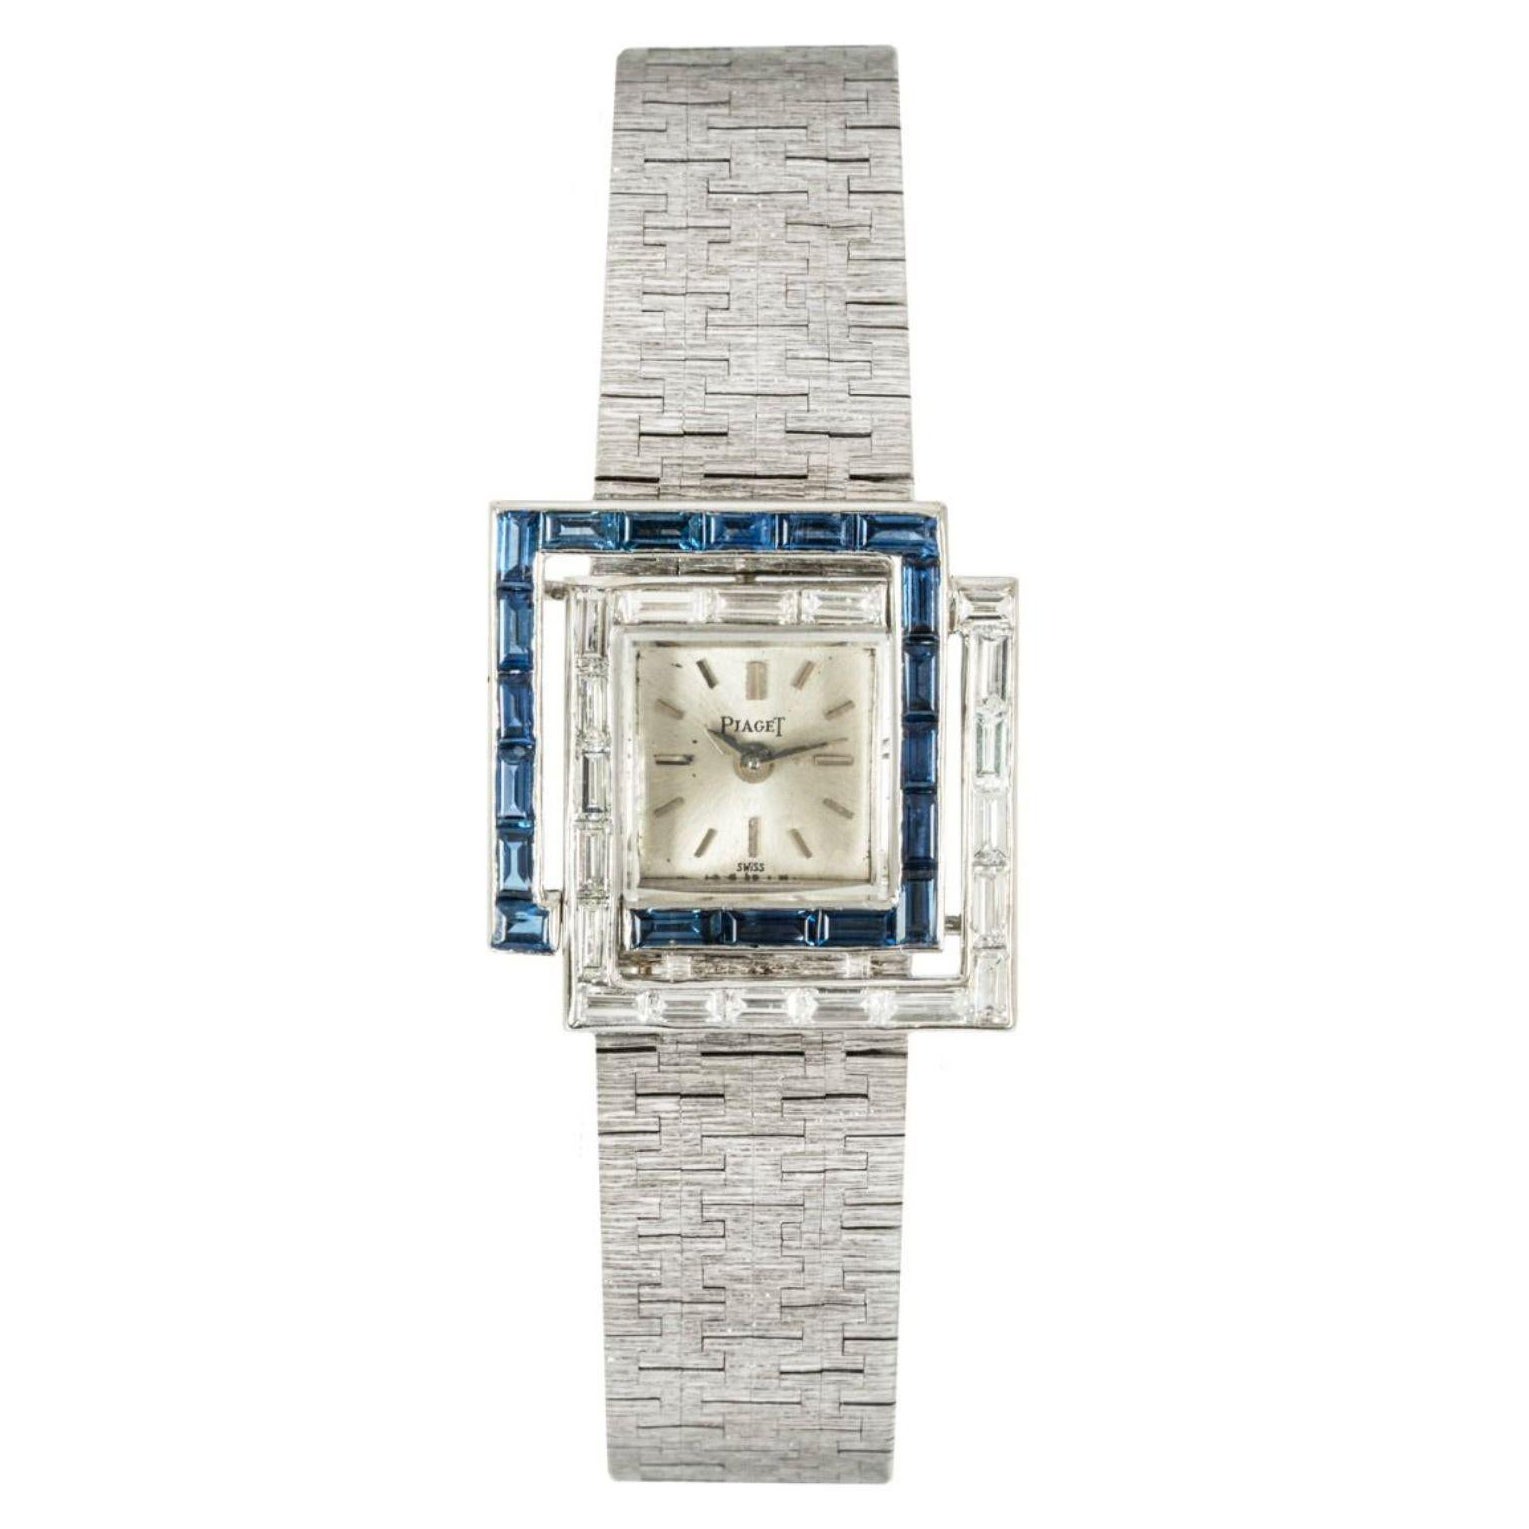 Piaget Cocktail Watch Diamond & Sapphire Set 2504 Watch